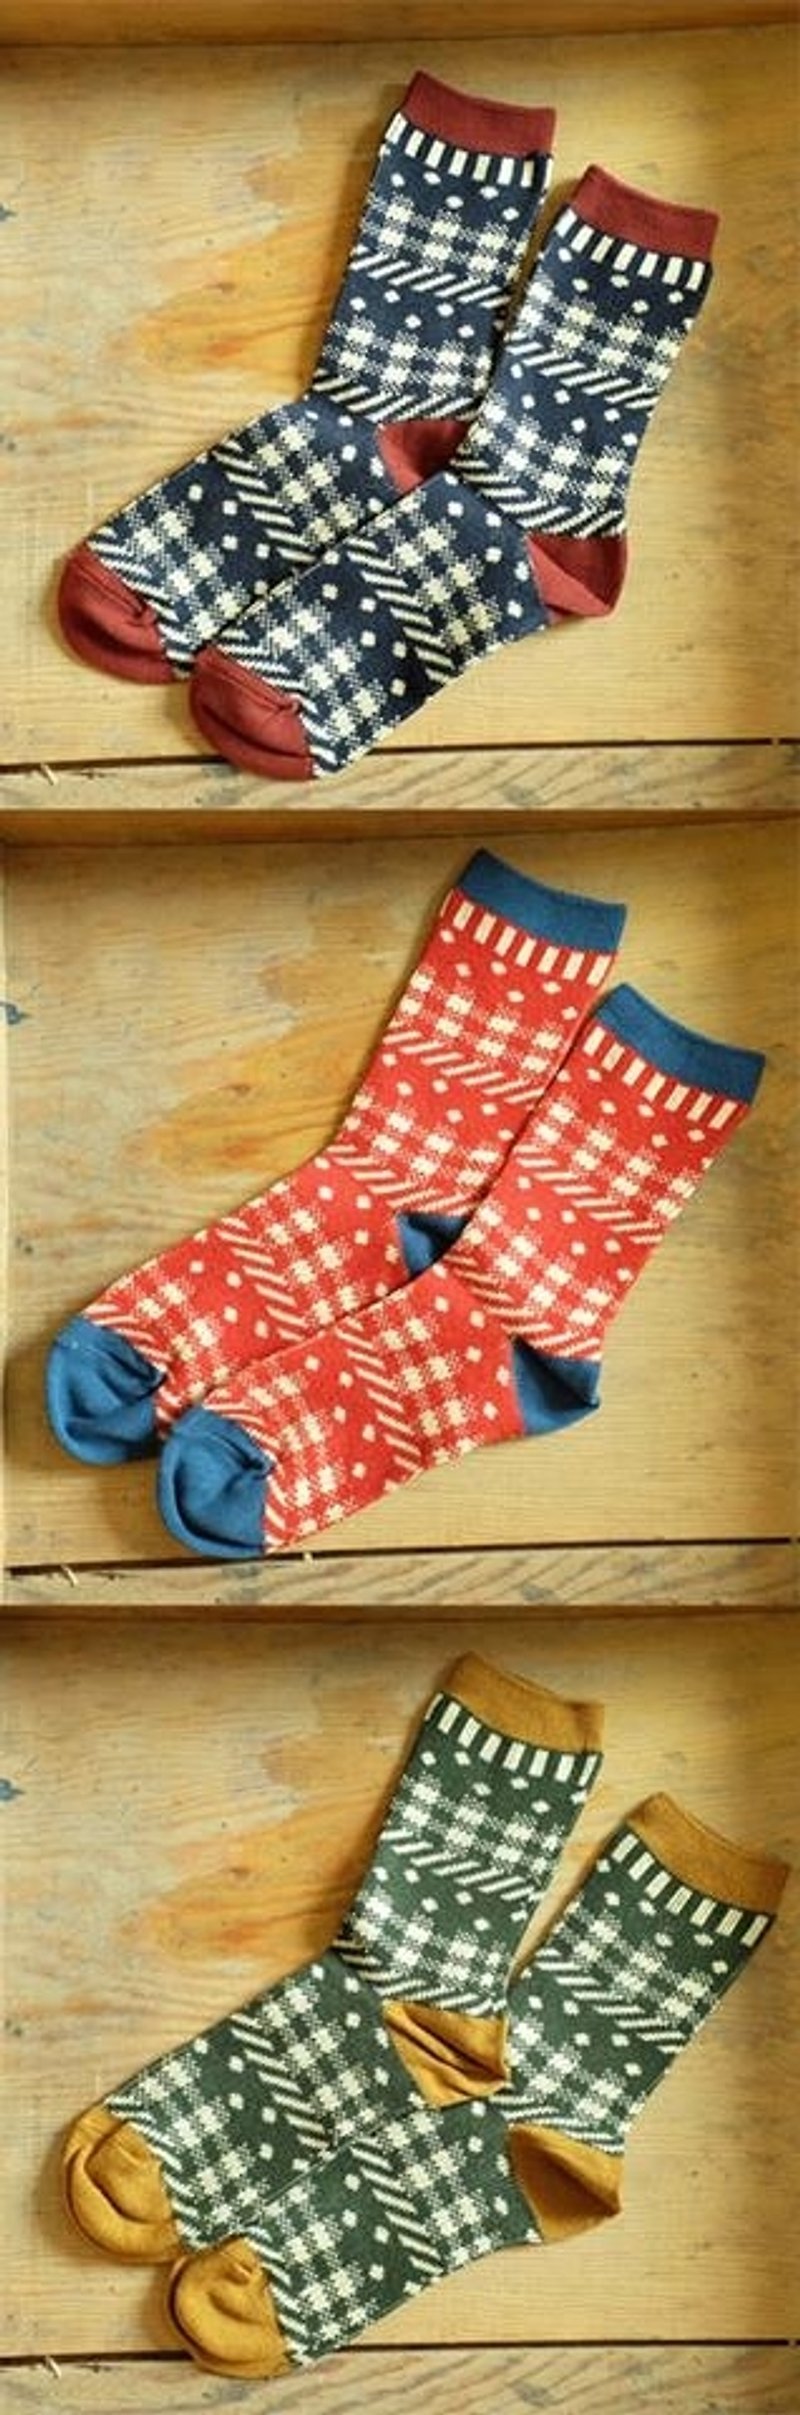 Bebebobo :::<咯咯笑笑>高品質方格圓點複古撞色襪 - Socks - Other Materials Red